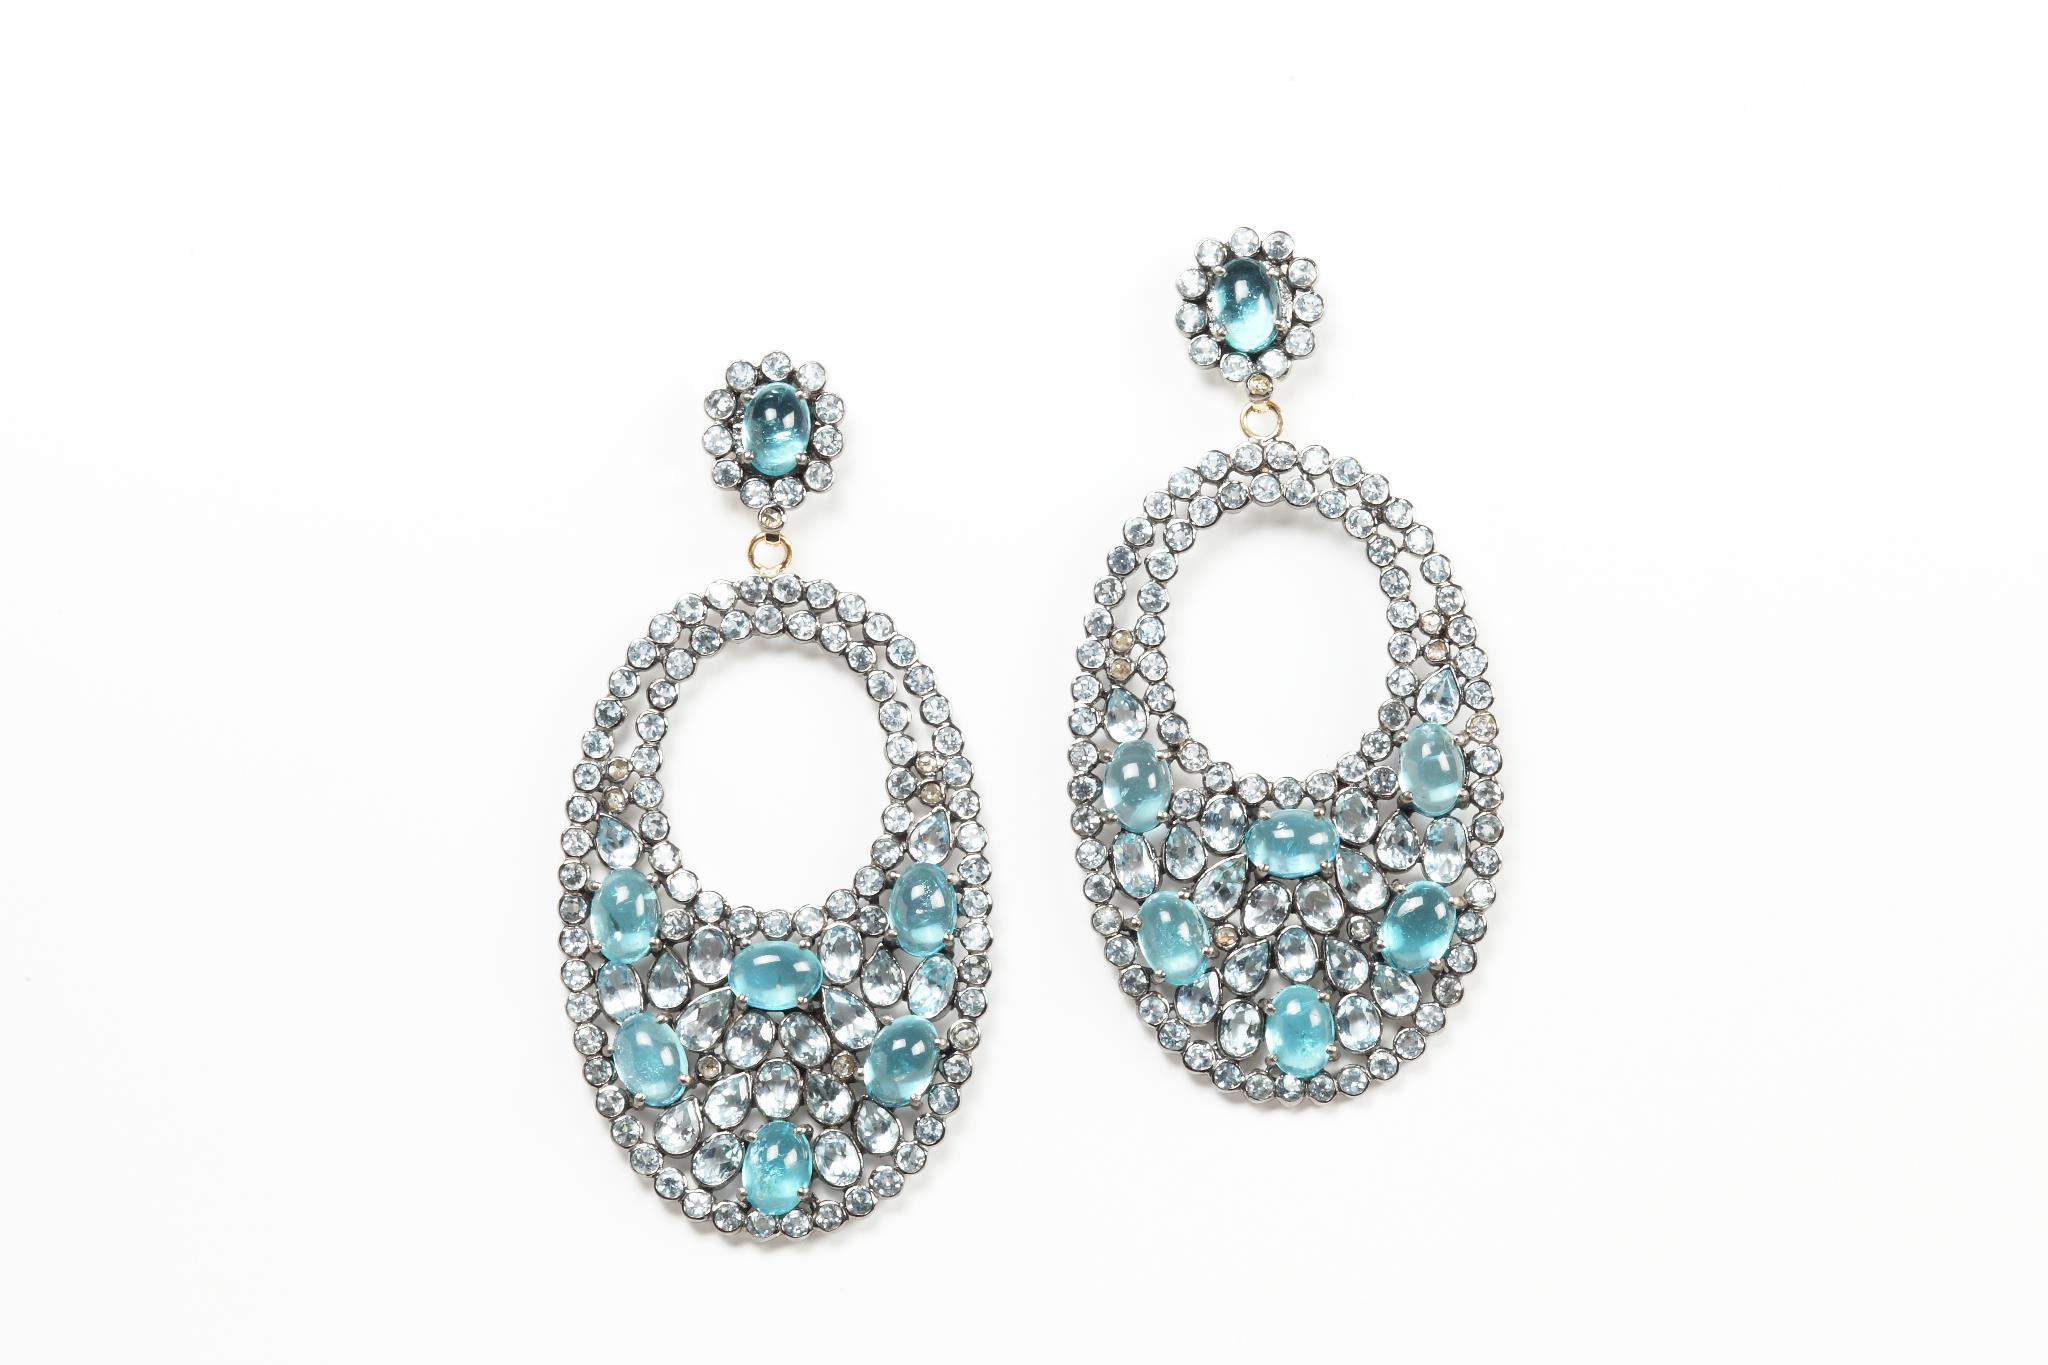 Rina Limor gemstone and diamond earrings